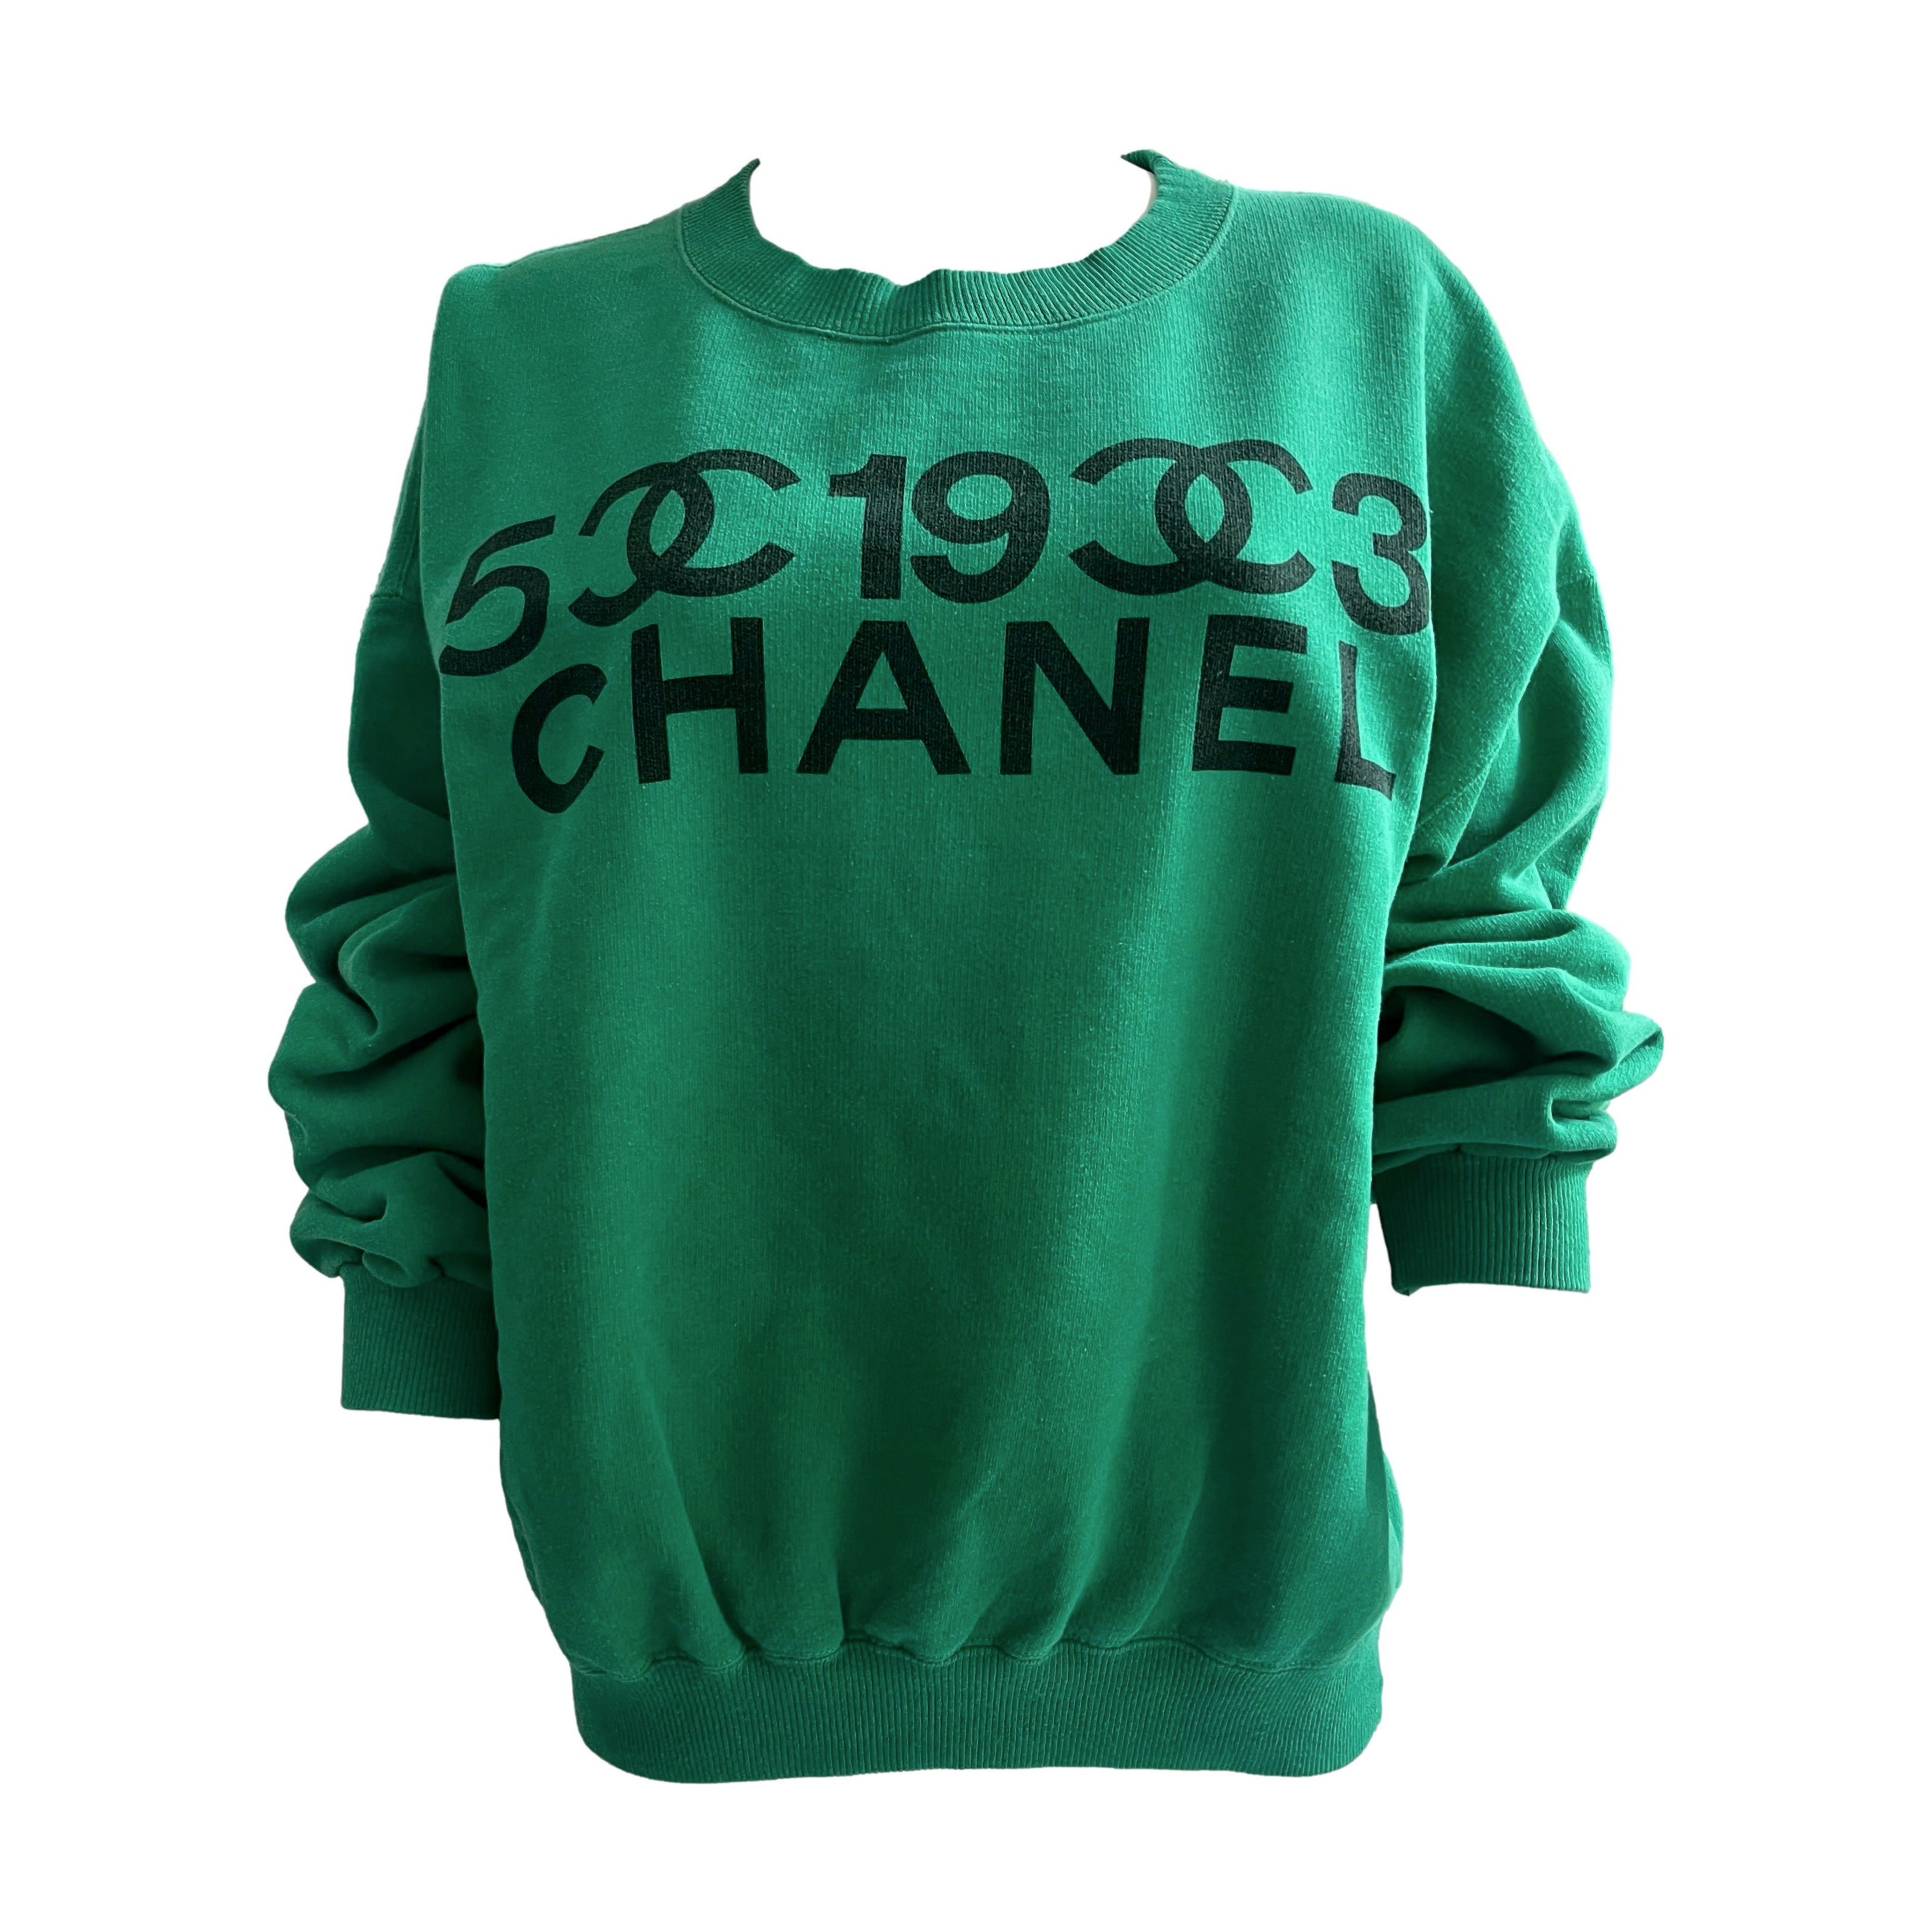 Chanel Vintage Terry Cloth Sweatshirt 1992 (S/M)